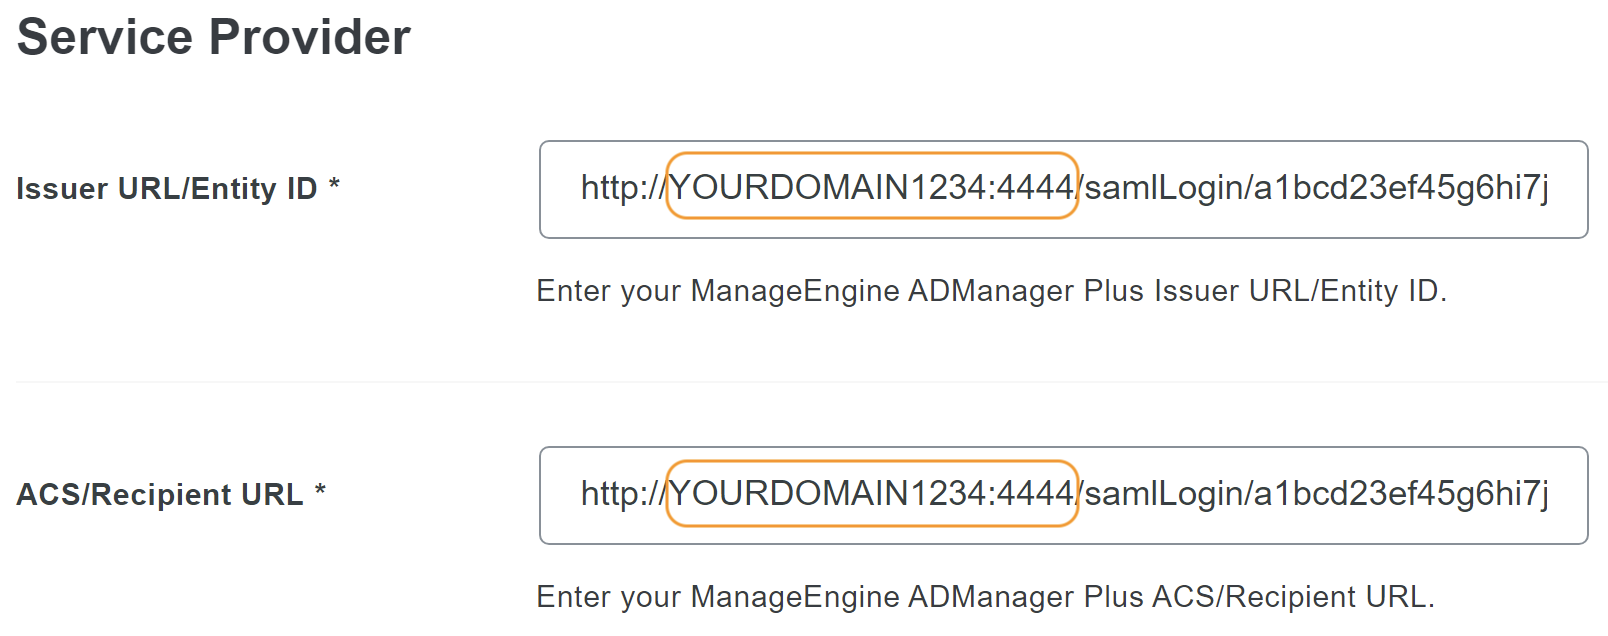 Duo ManageEngine ADManager Plus Service Provider URLs